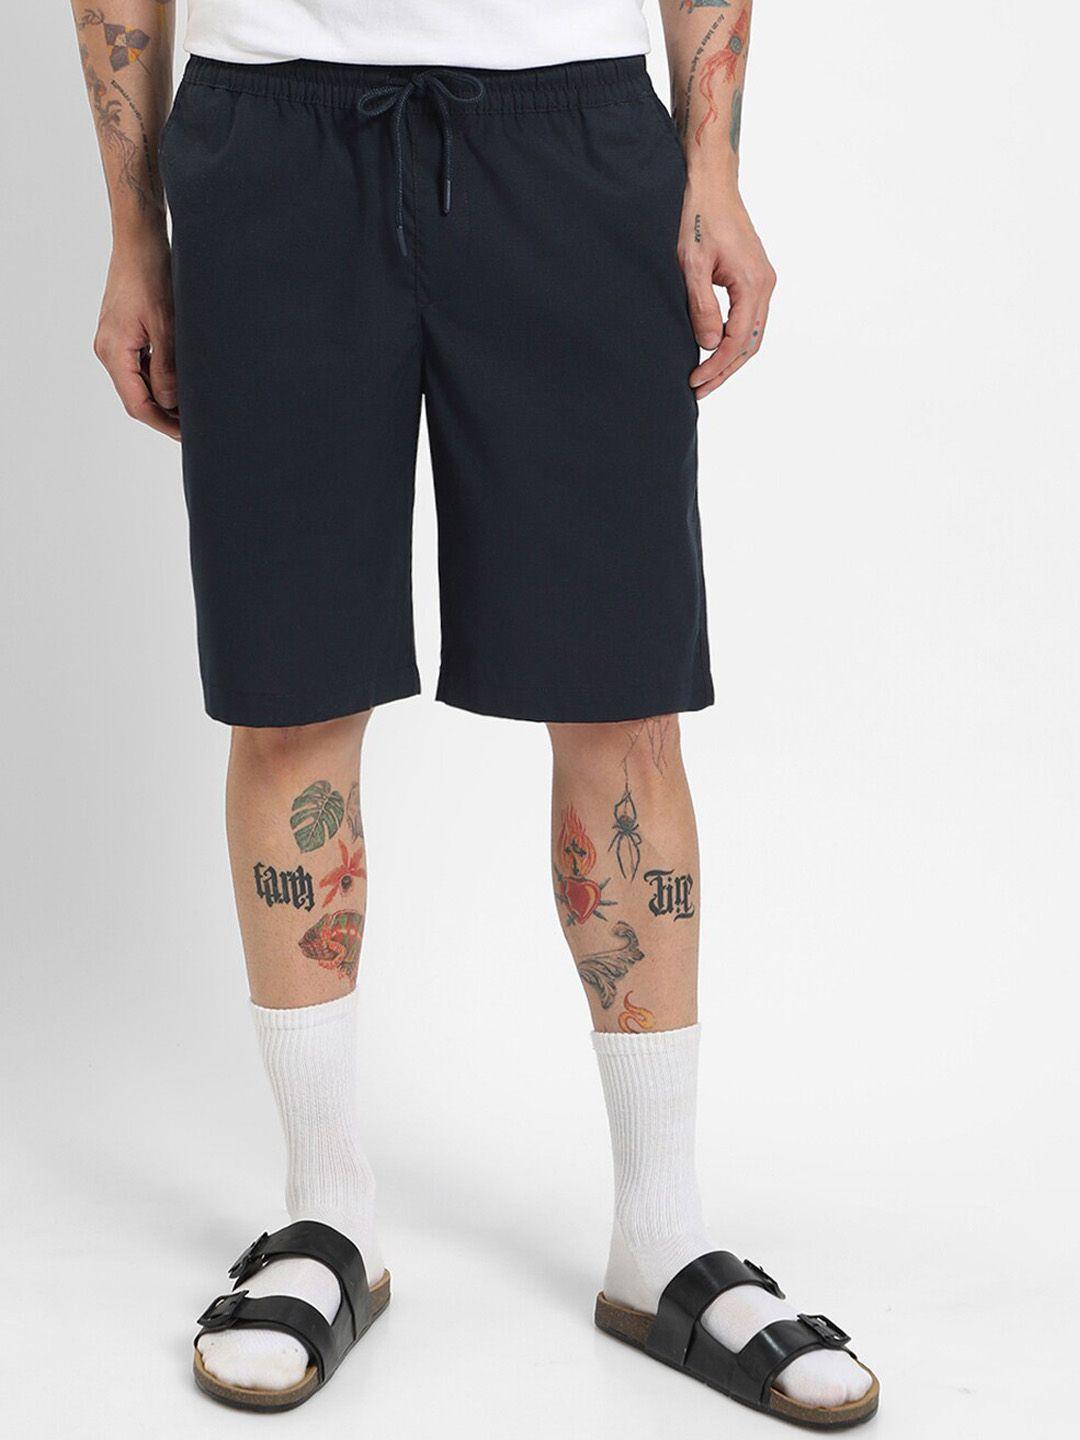 bewakoof-men-solid-pure-cotton-shorts